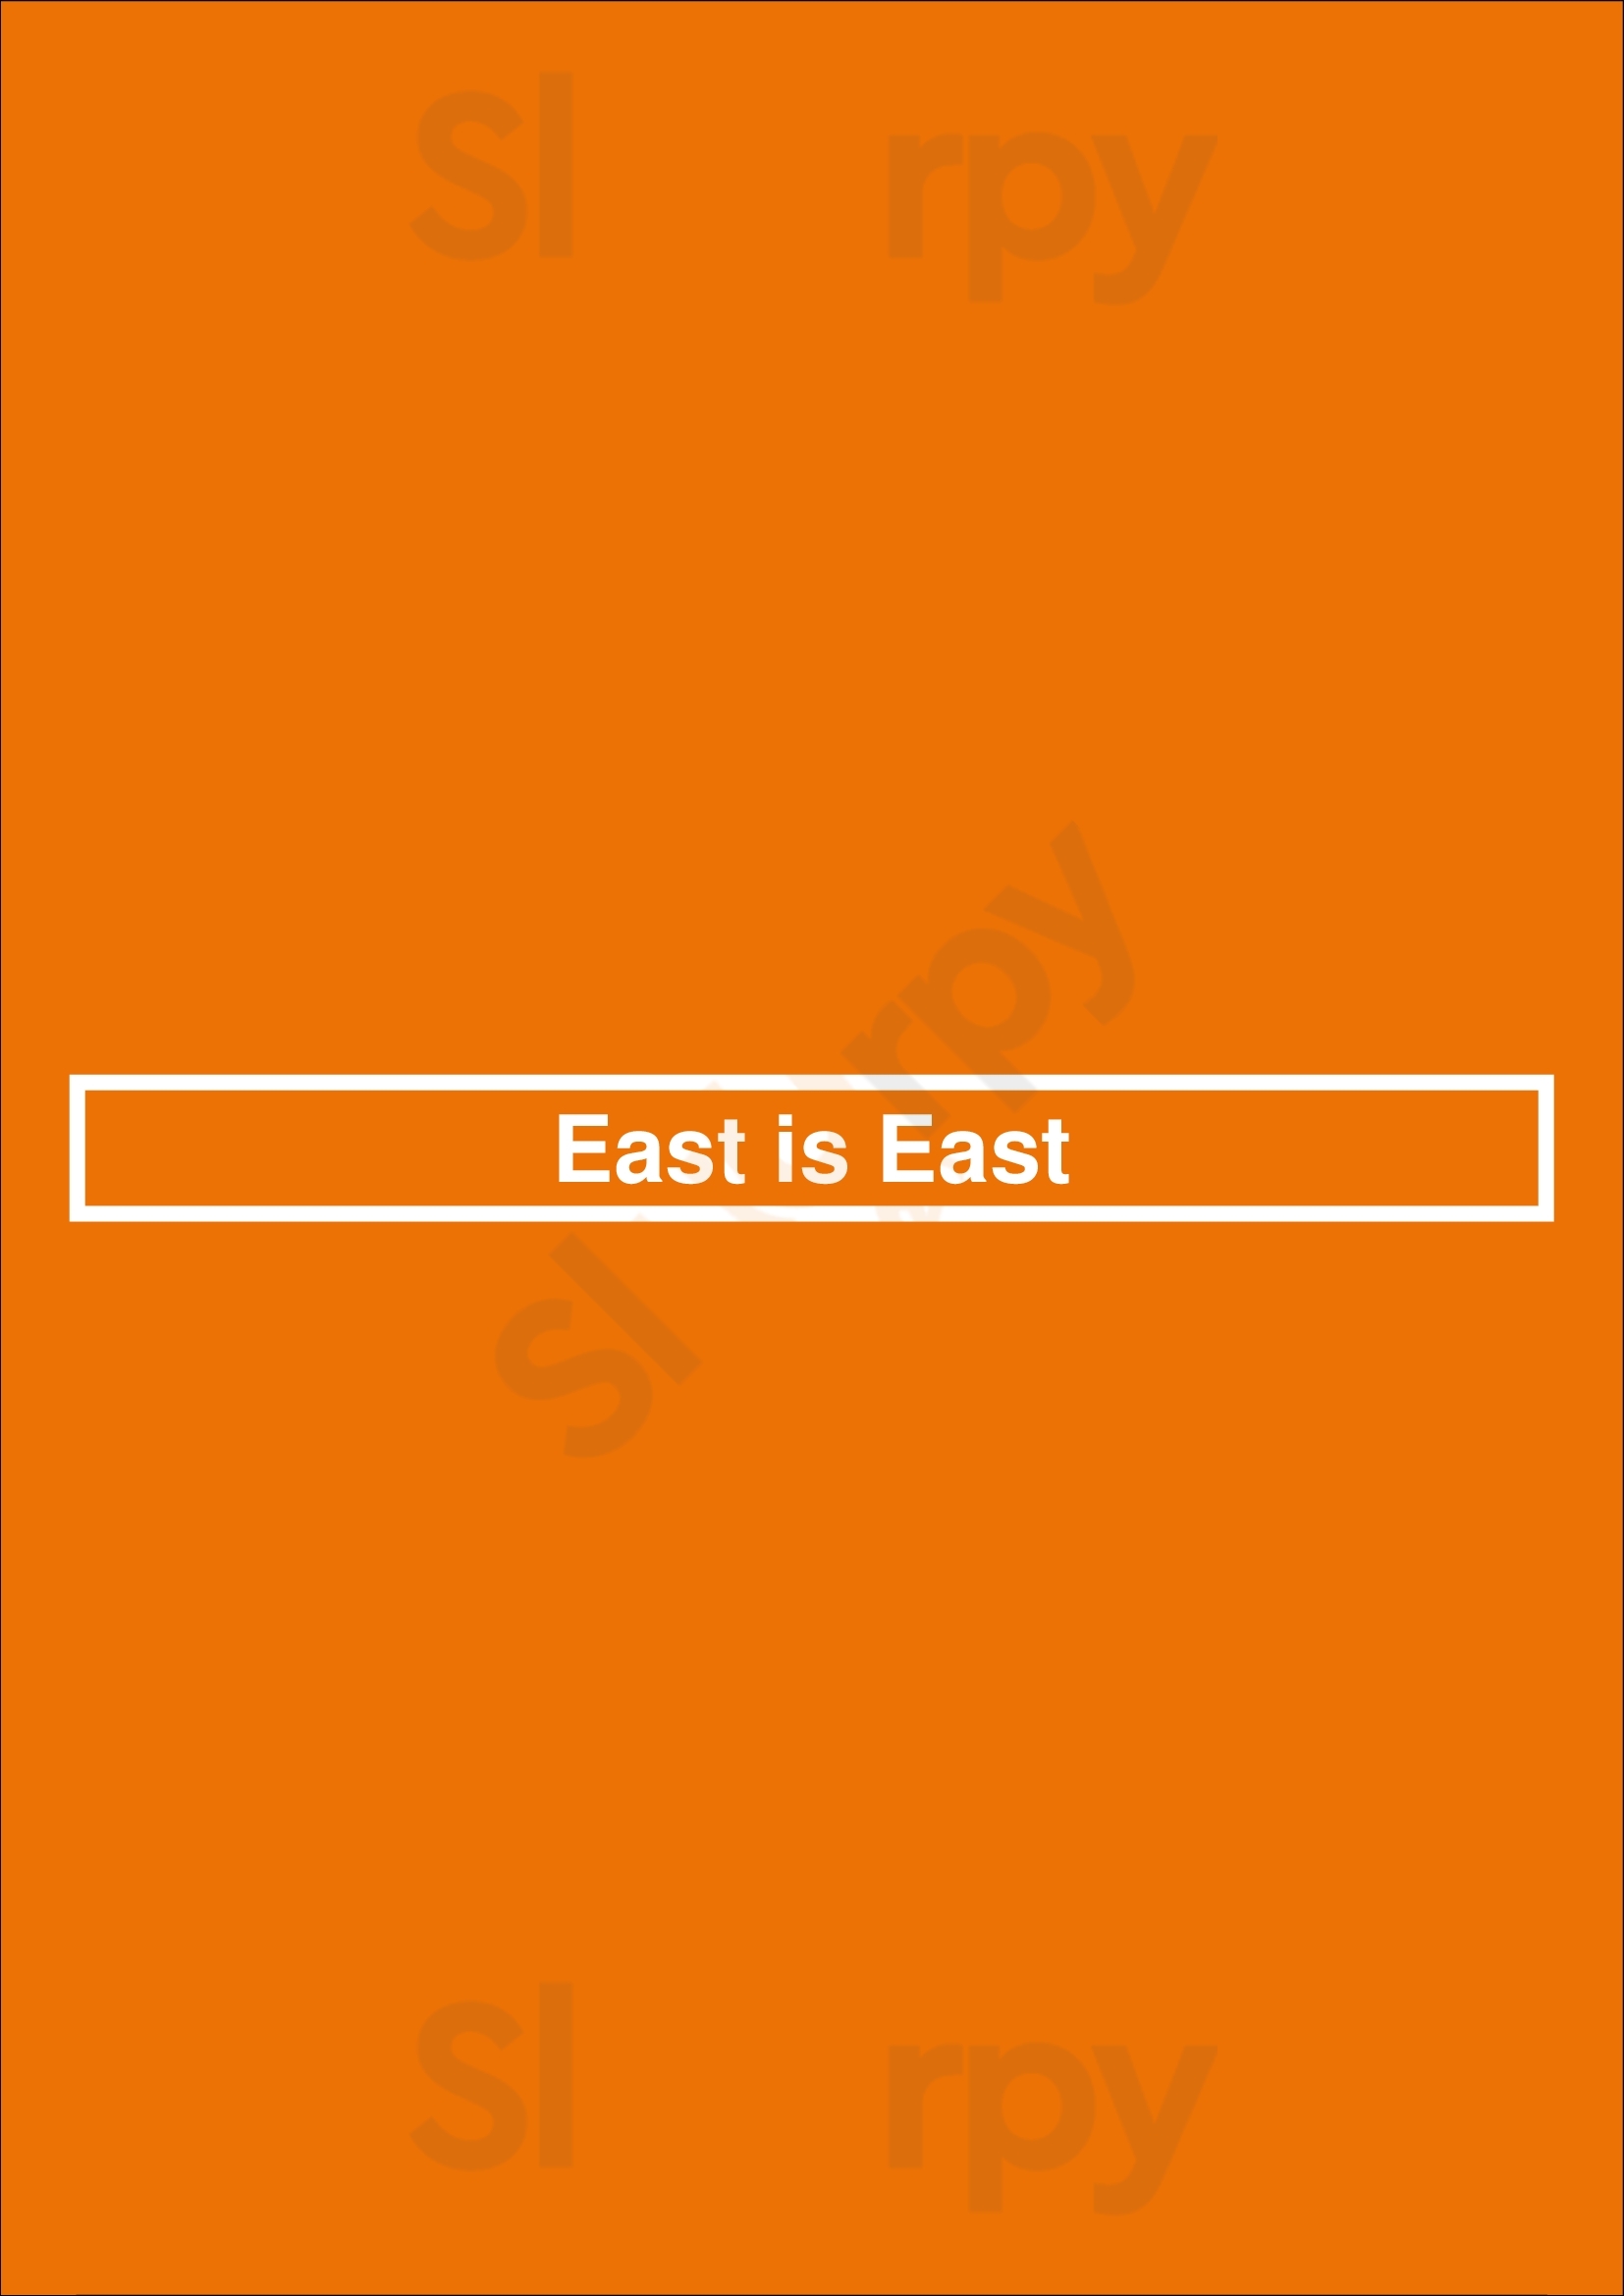 East Is East - Chai Lounge Vancouver Menu - 1